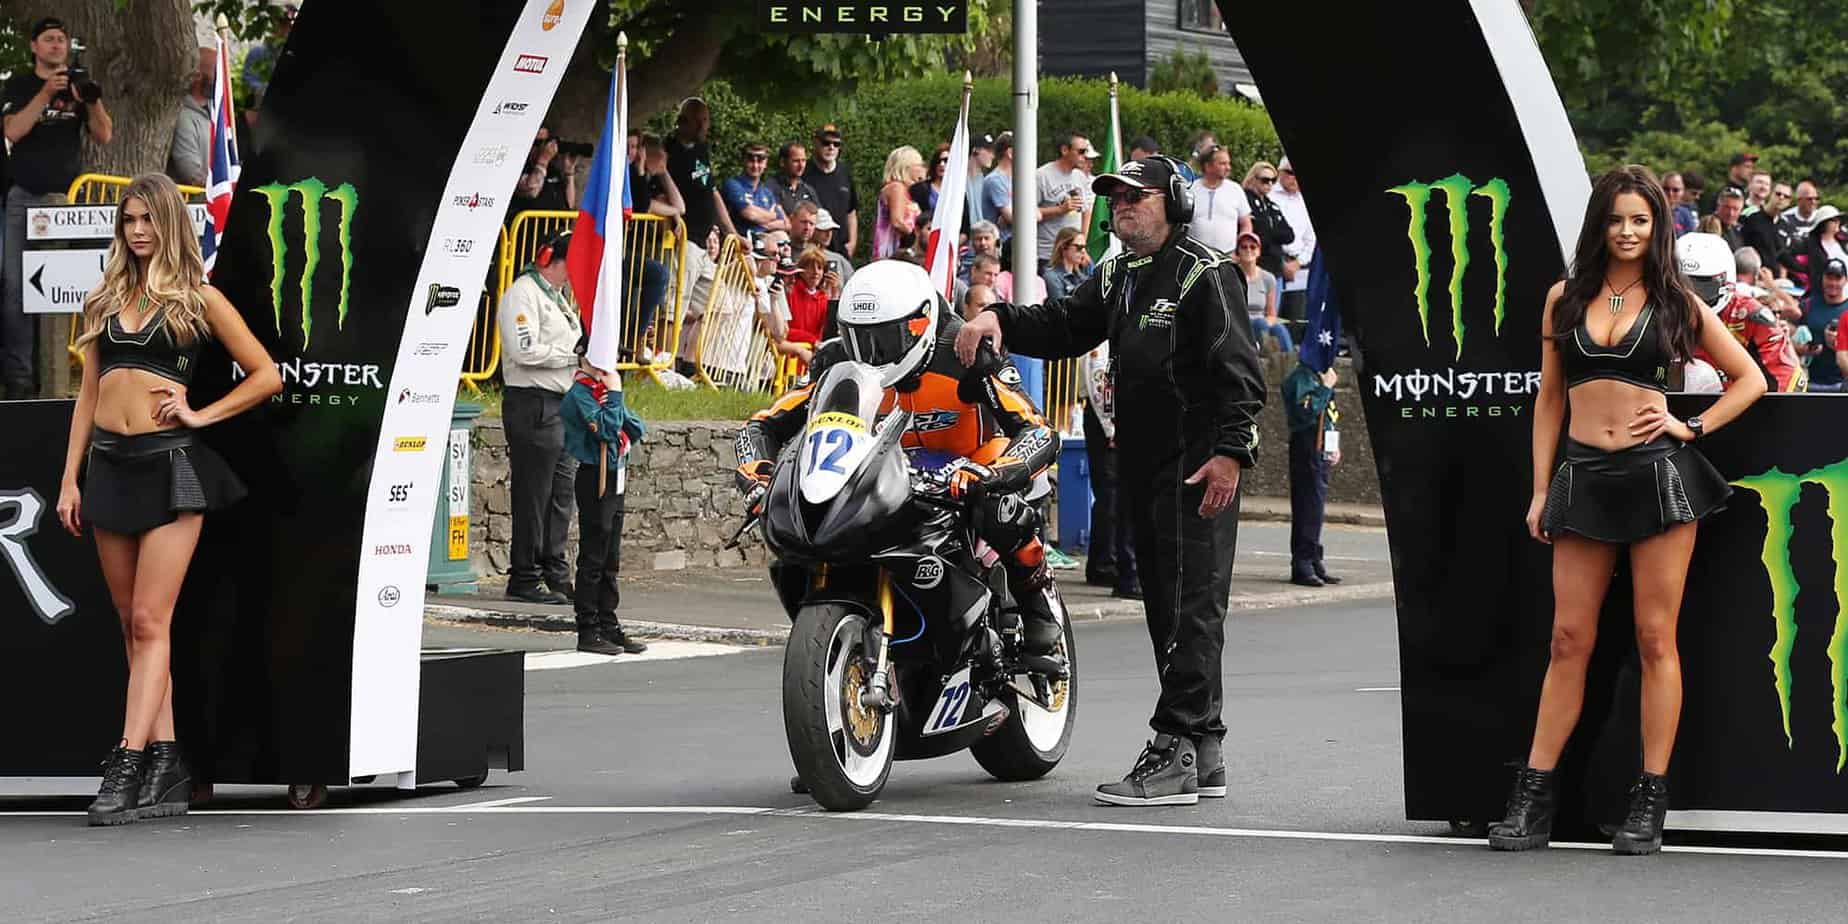 Isle of Man motorcycle race